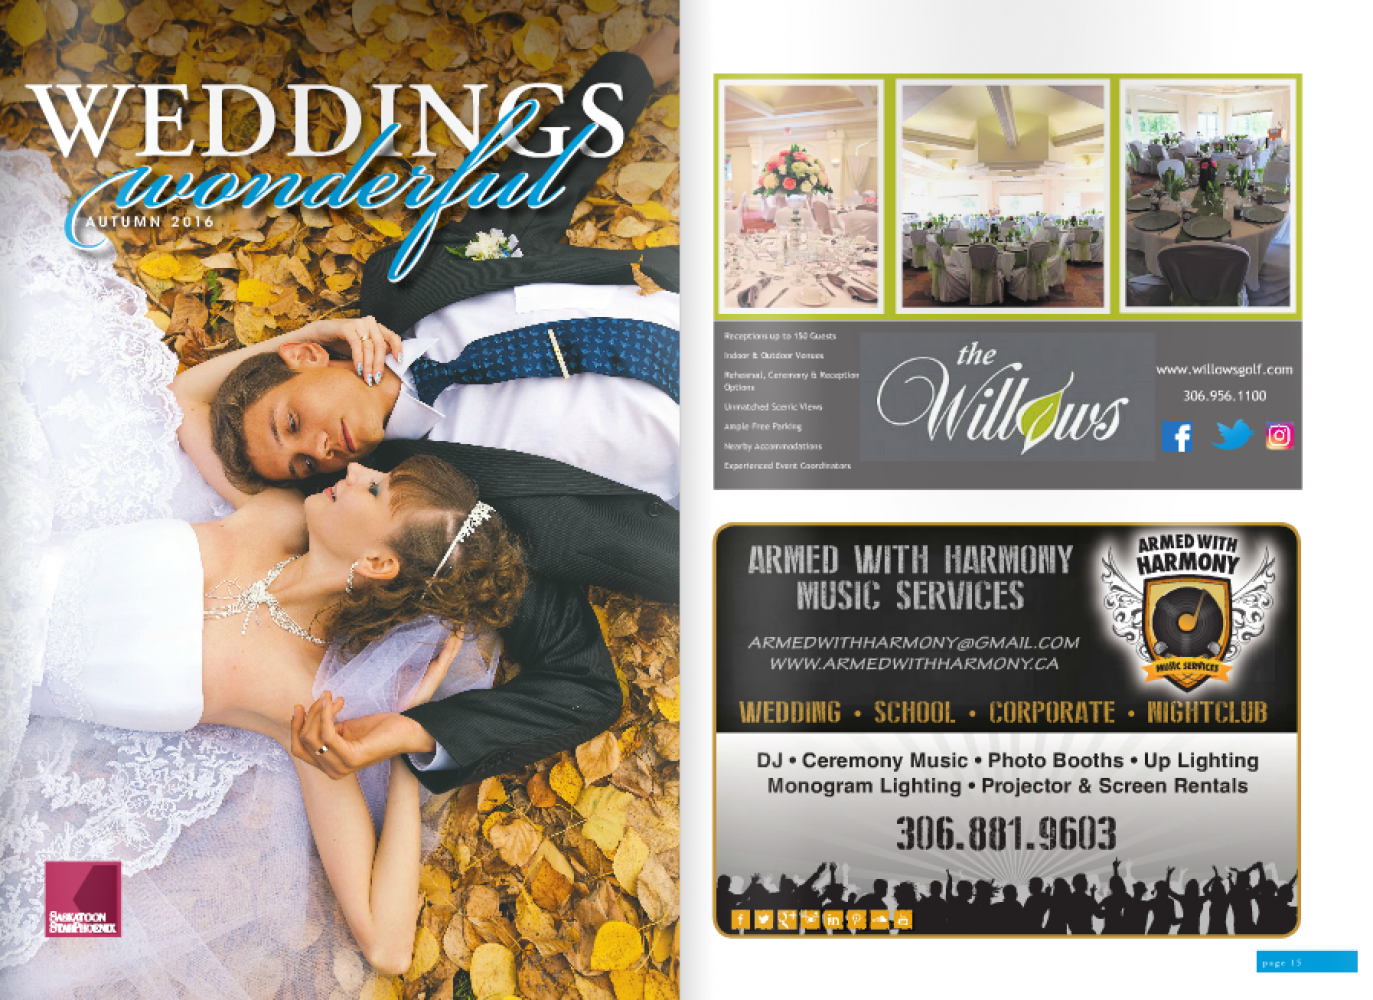 Weddings Wonderful - Saskatoon Star Phoenix - Saskatoon DJ & Photo Booth Armed With Harmony